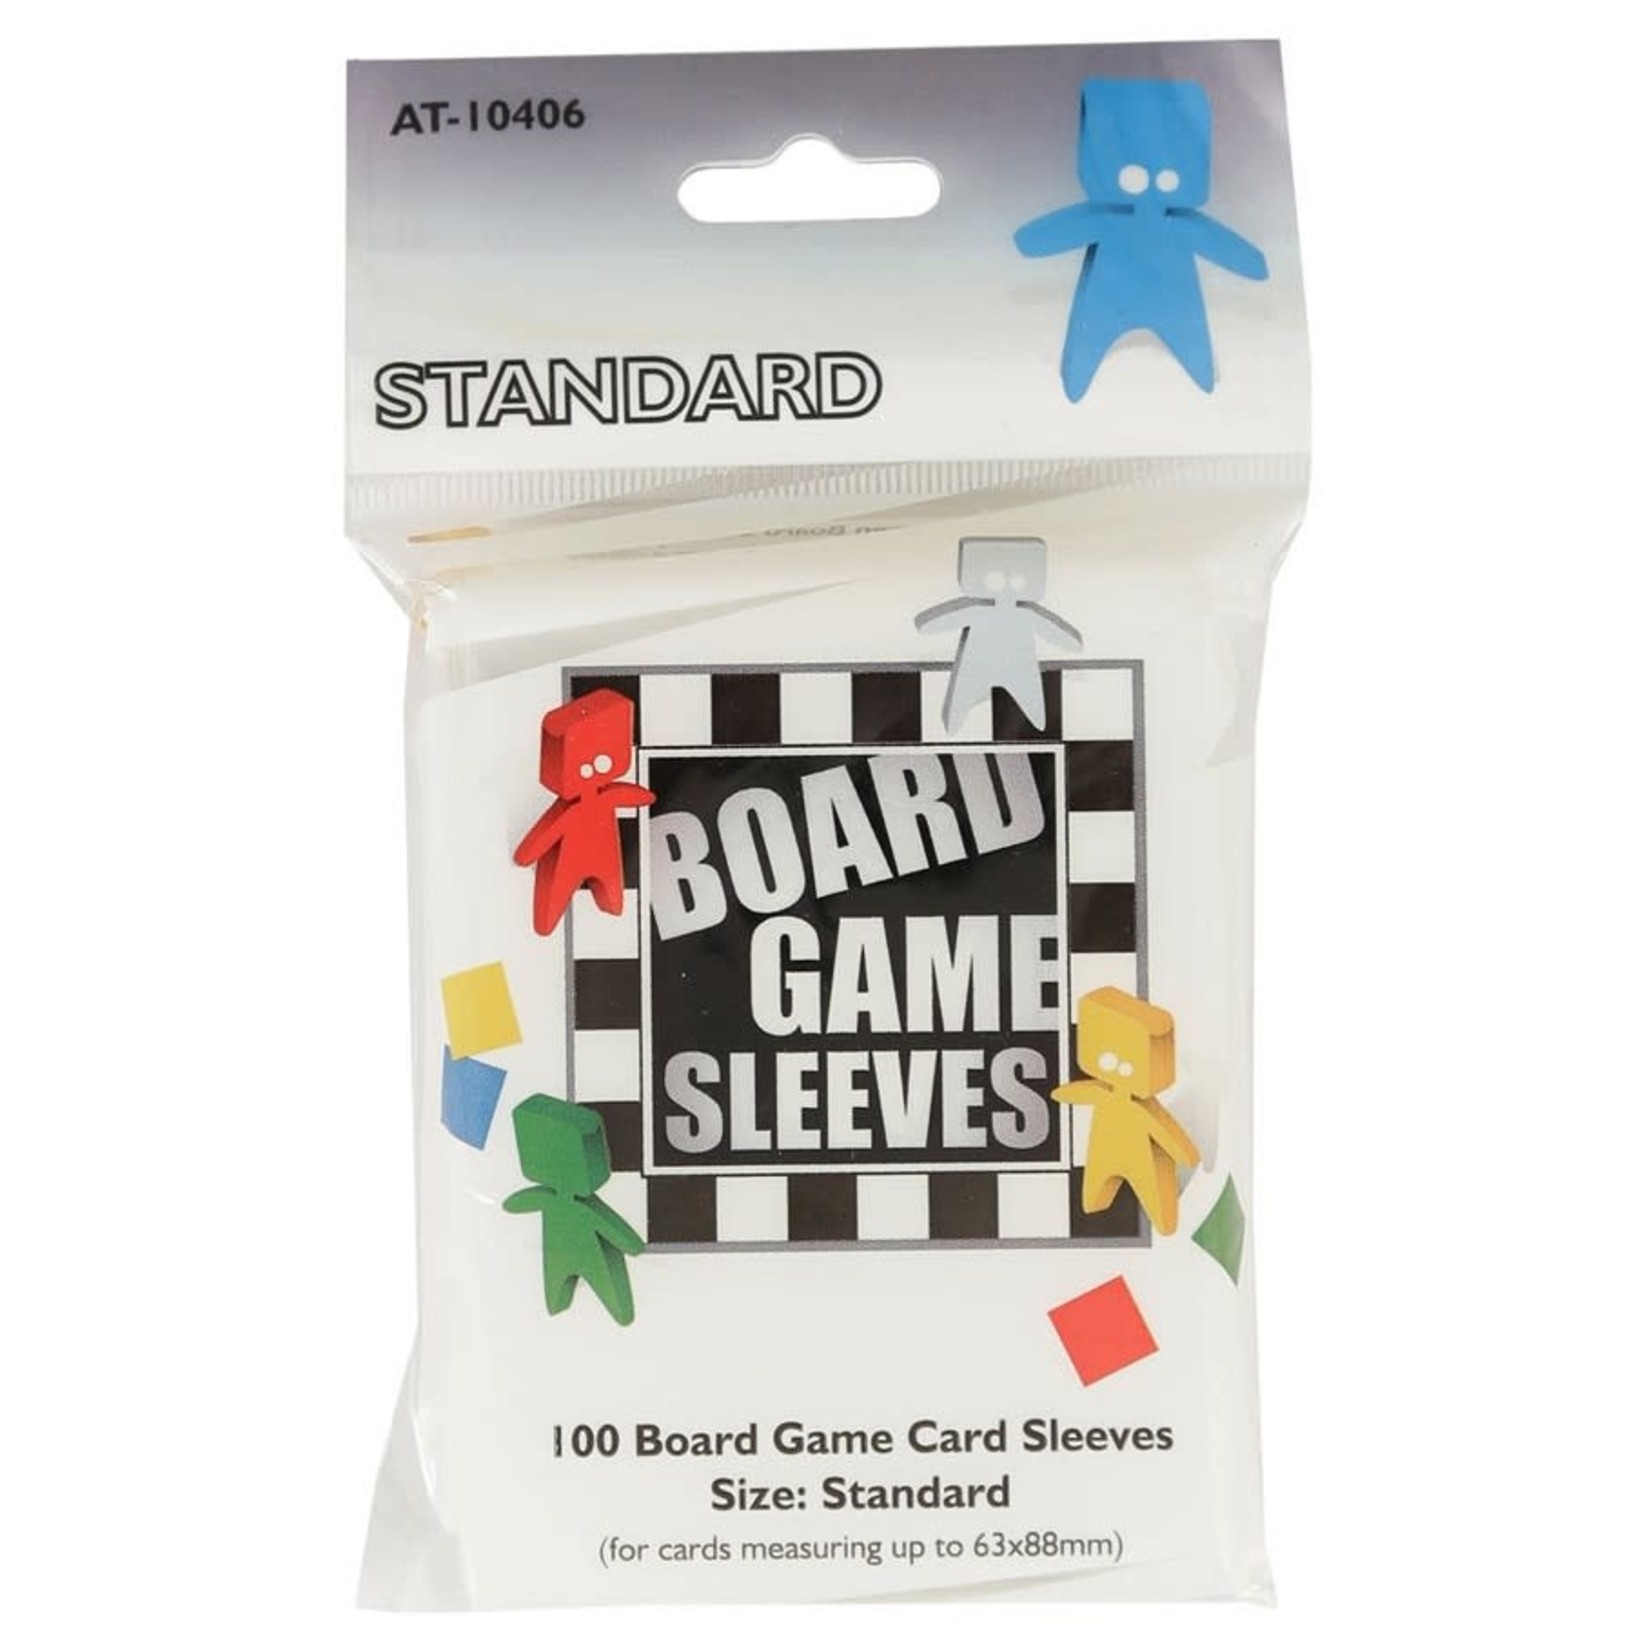 Arcane Tinmen Board Game Card Sleeves: 100 Standard